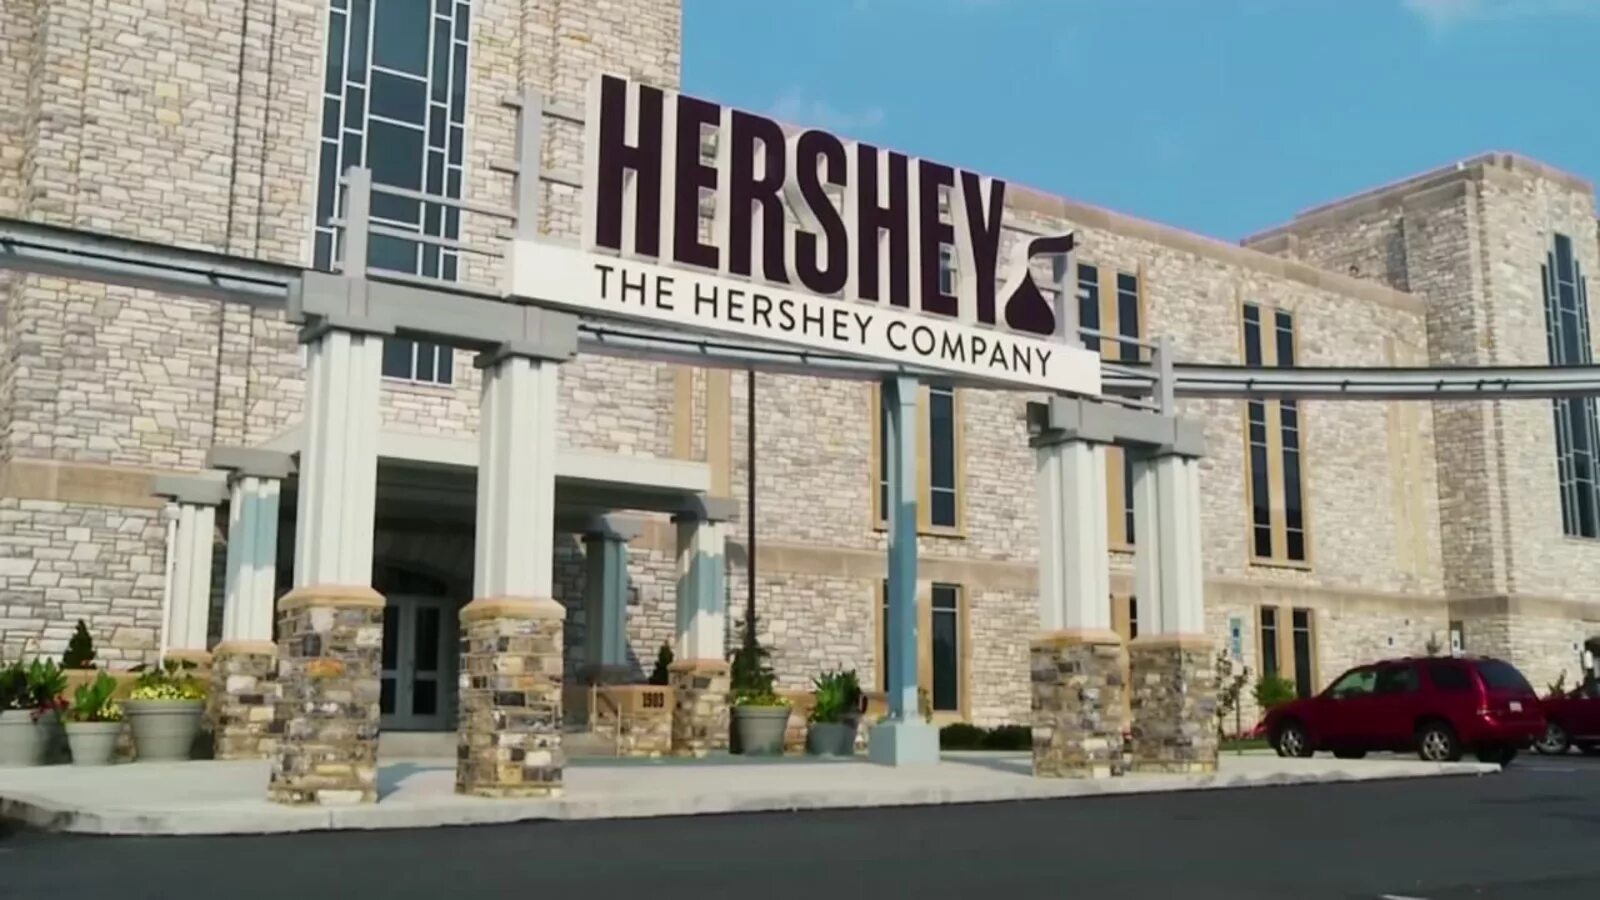 The hershey company. Компания Hershey. Hershey Company в Пенсильвании, США.. Hershey город. Город Херши и шоколад.